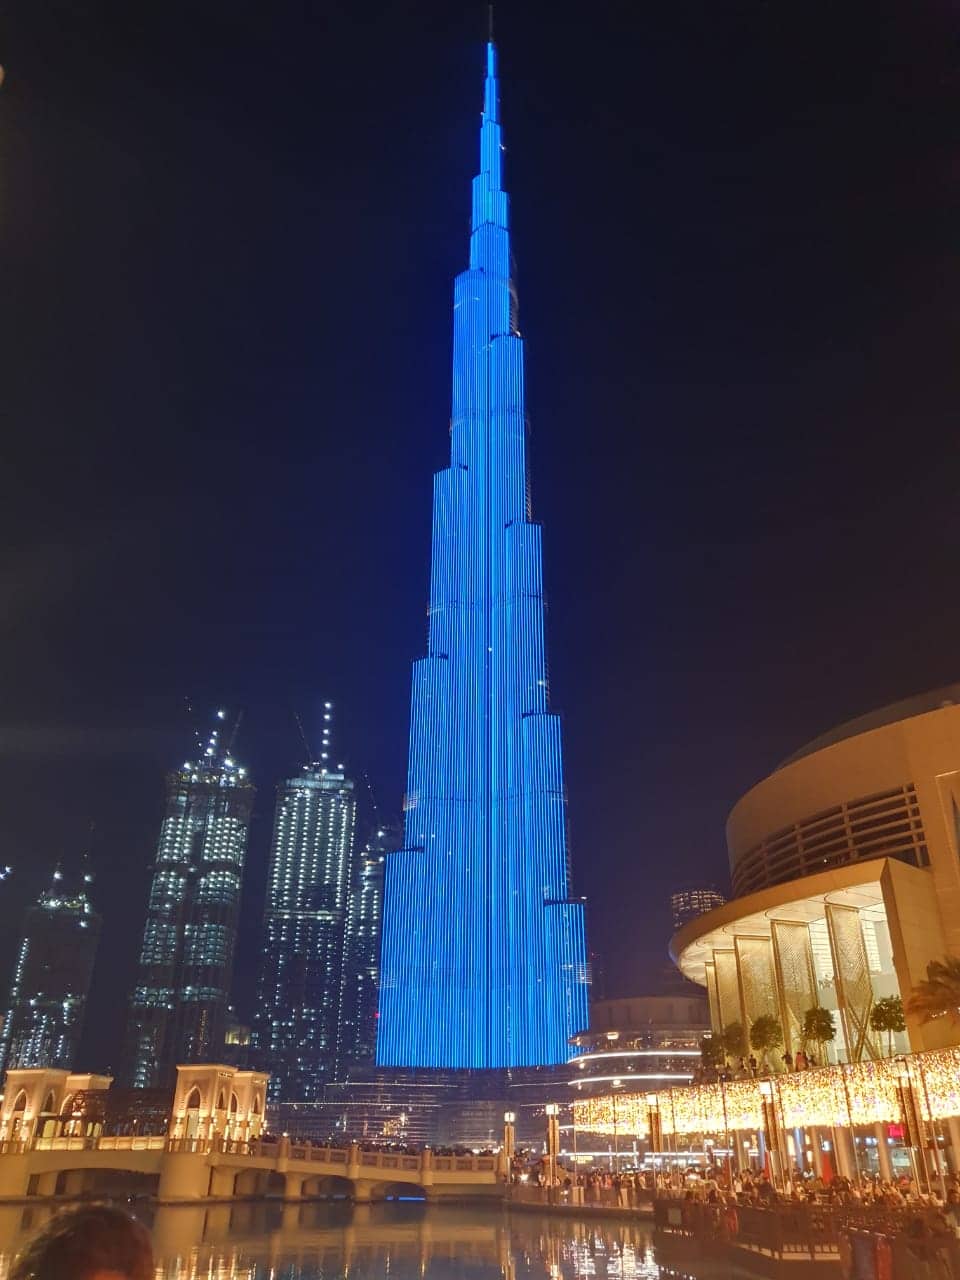 Burj Khalifa, Dubai, UAE (tallest building in the world) - lit up in BLUE for International Angelman Day 2020